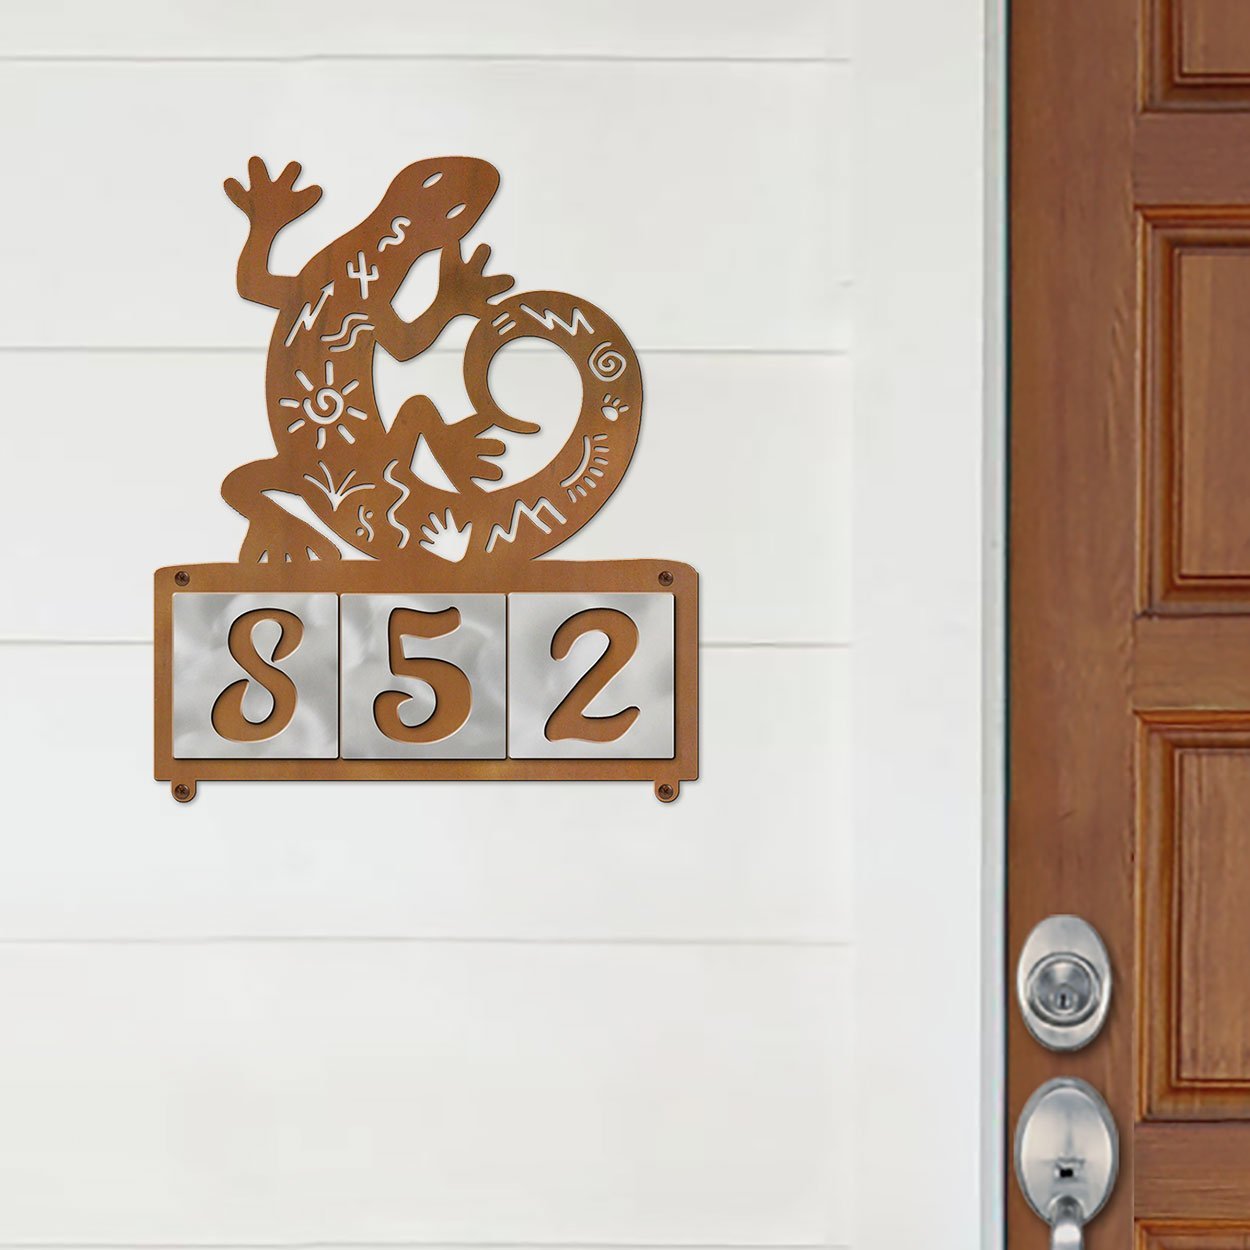 607093 - Petroglyph Lizard Design 3-Digit Horizontal 4-inch Tile Outdoor House Numbers